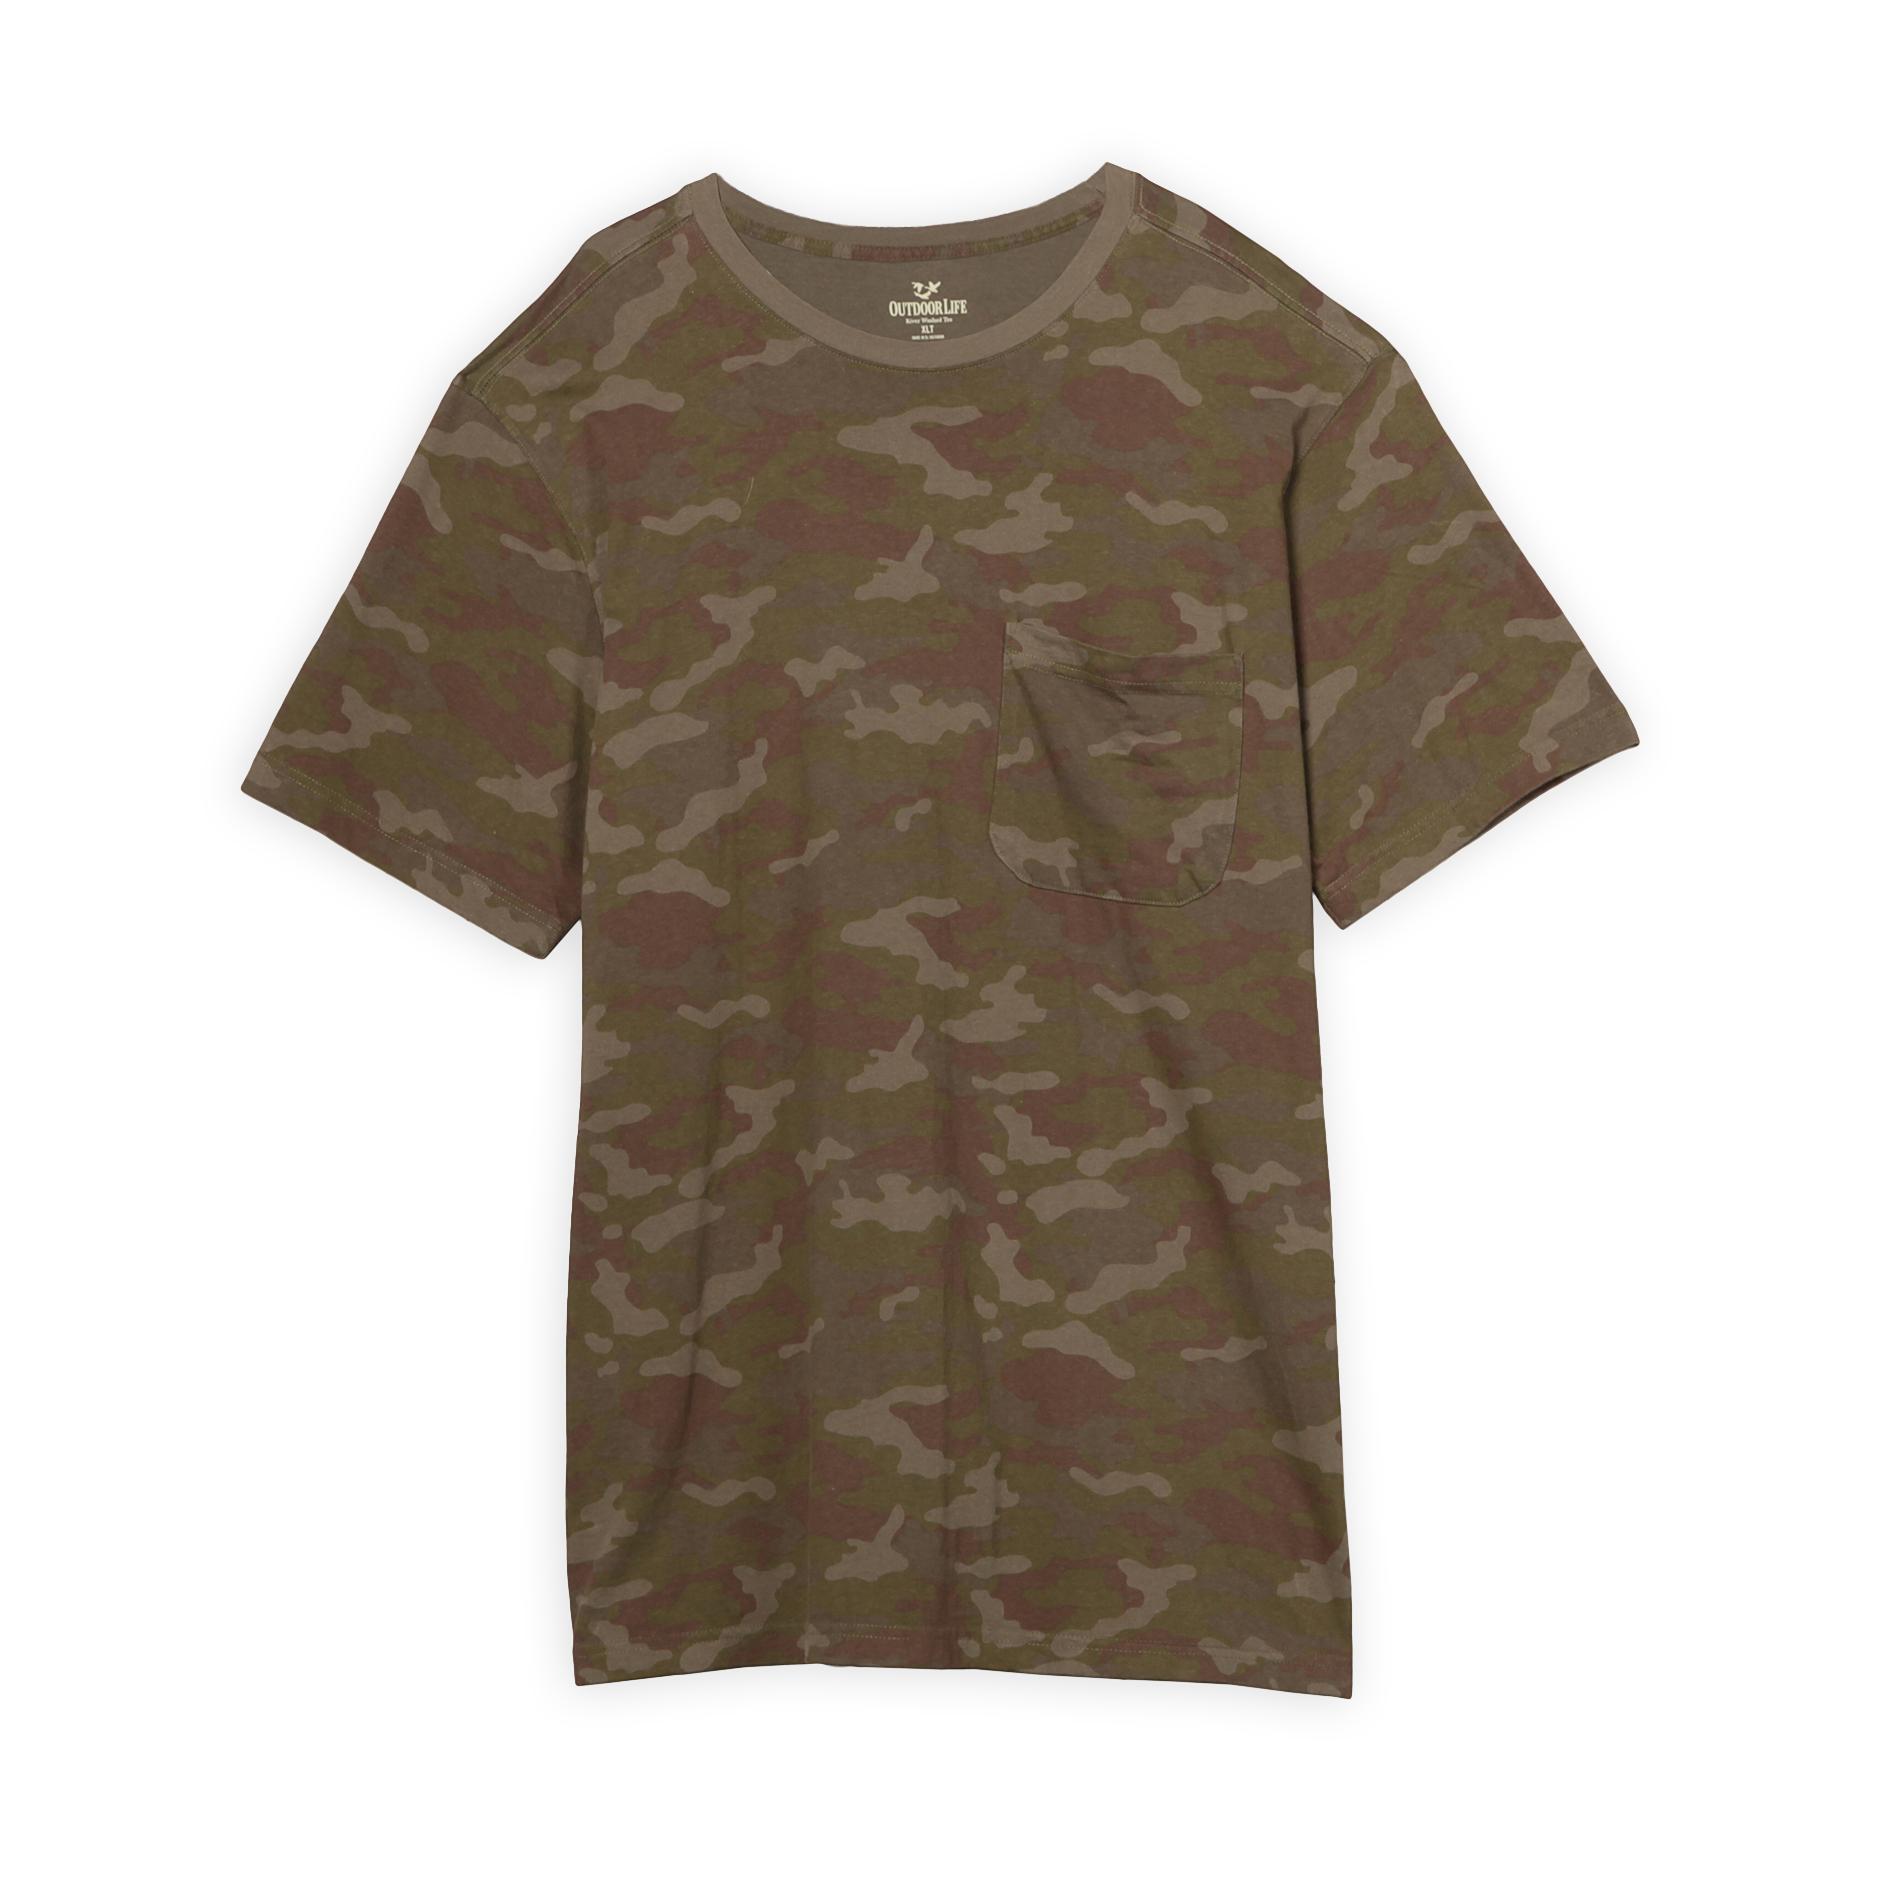 Outdoor Life Men's Big & Tall Pocket T-Shirt - Camouflage